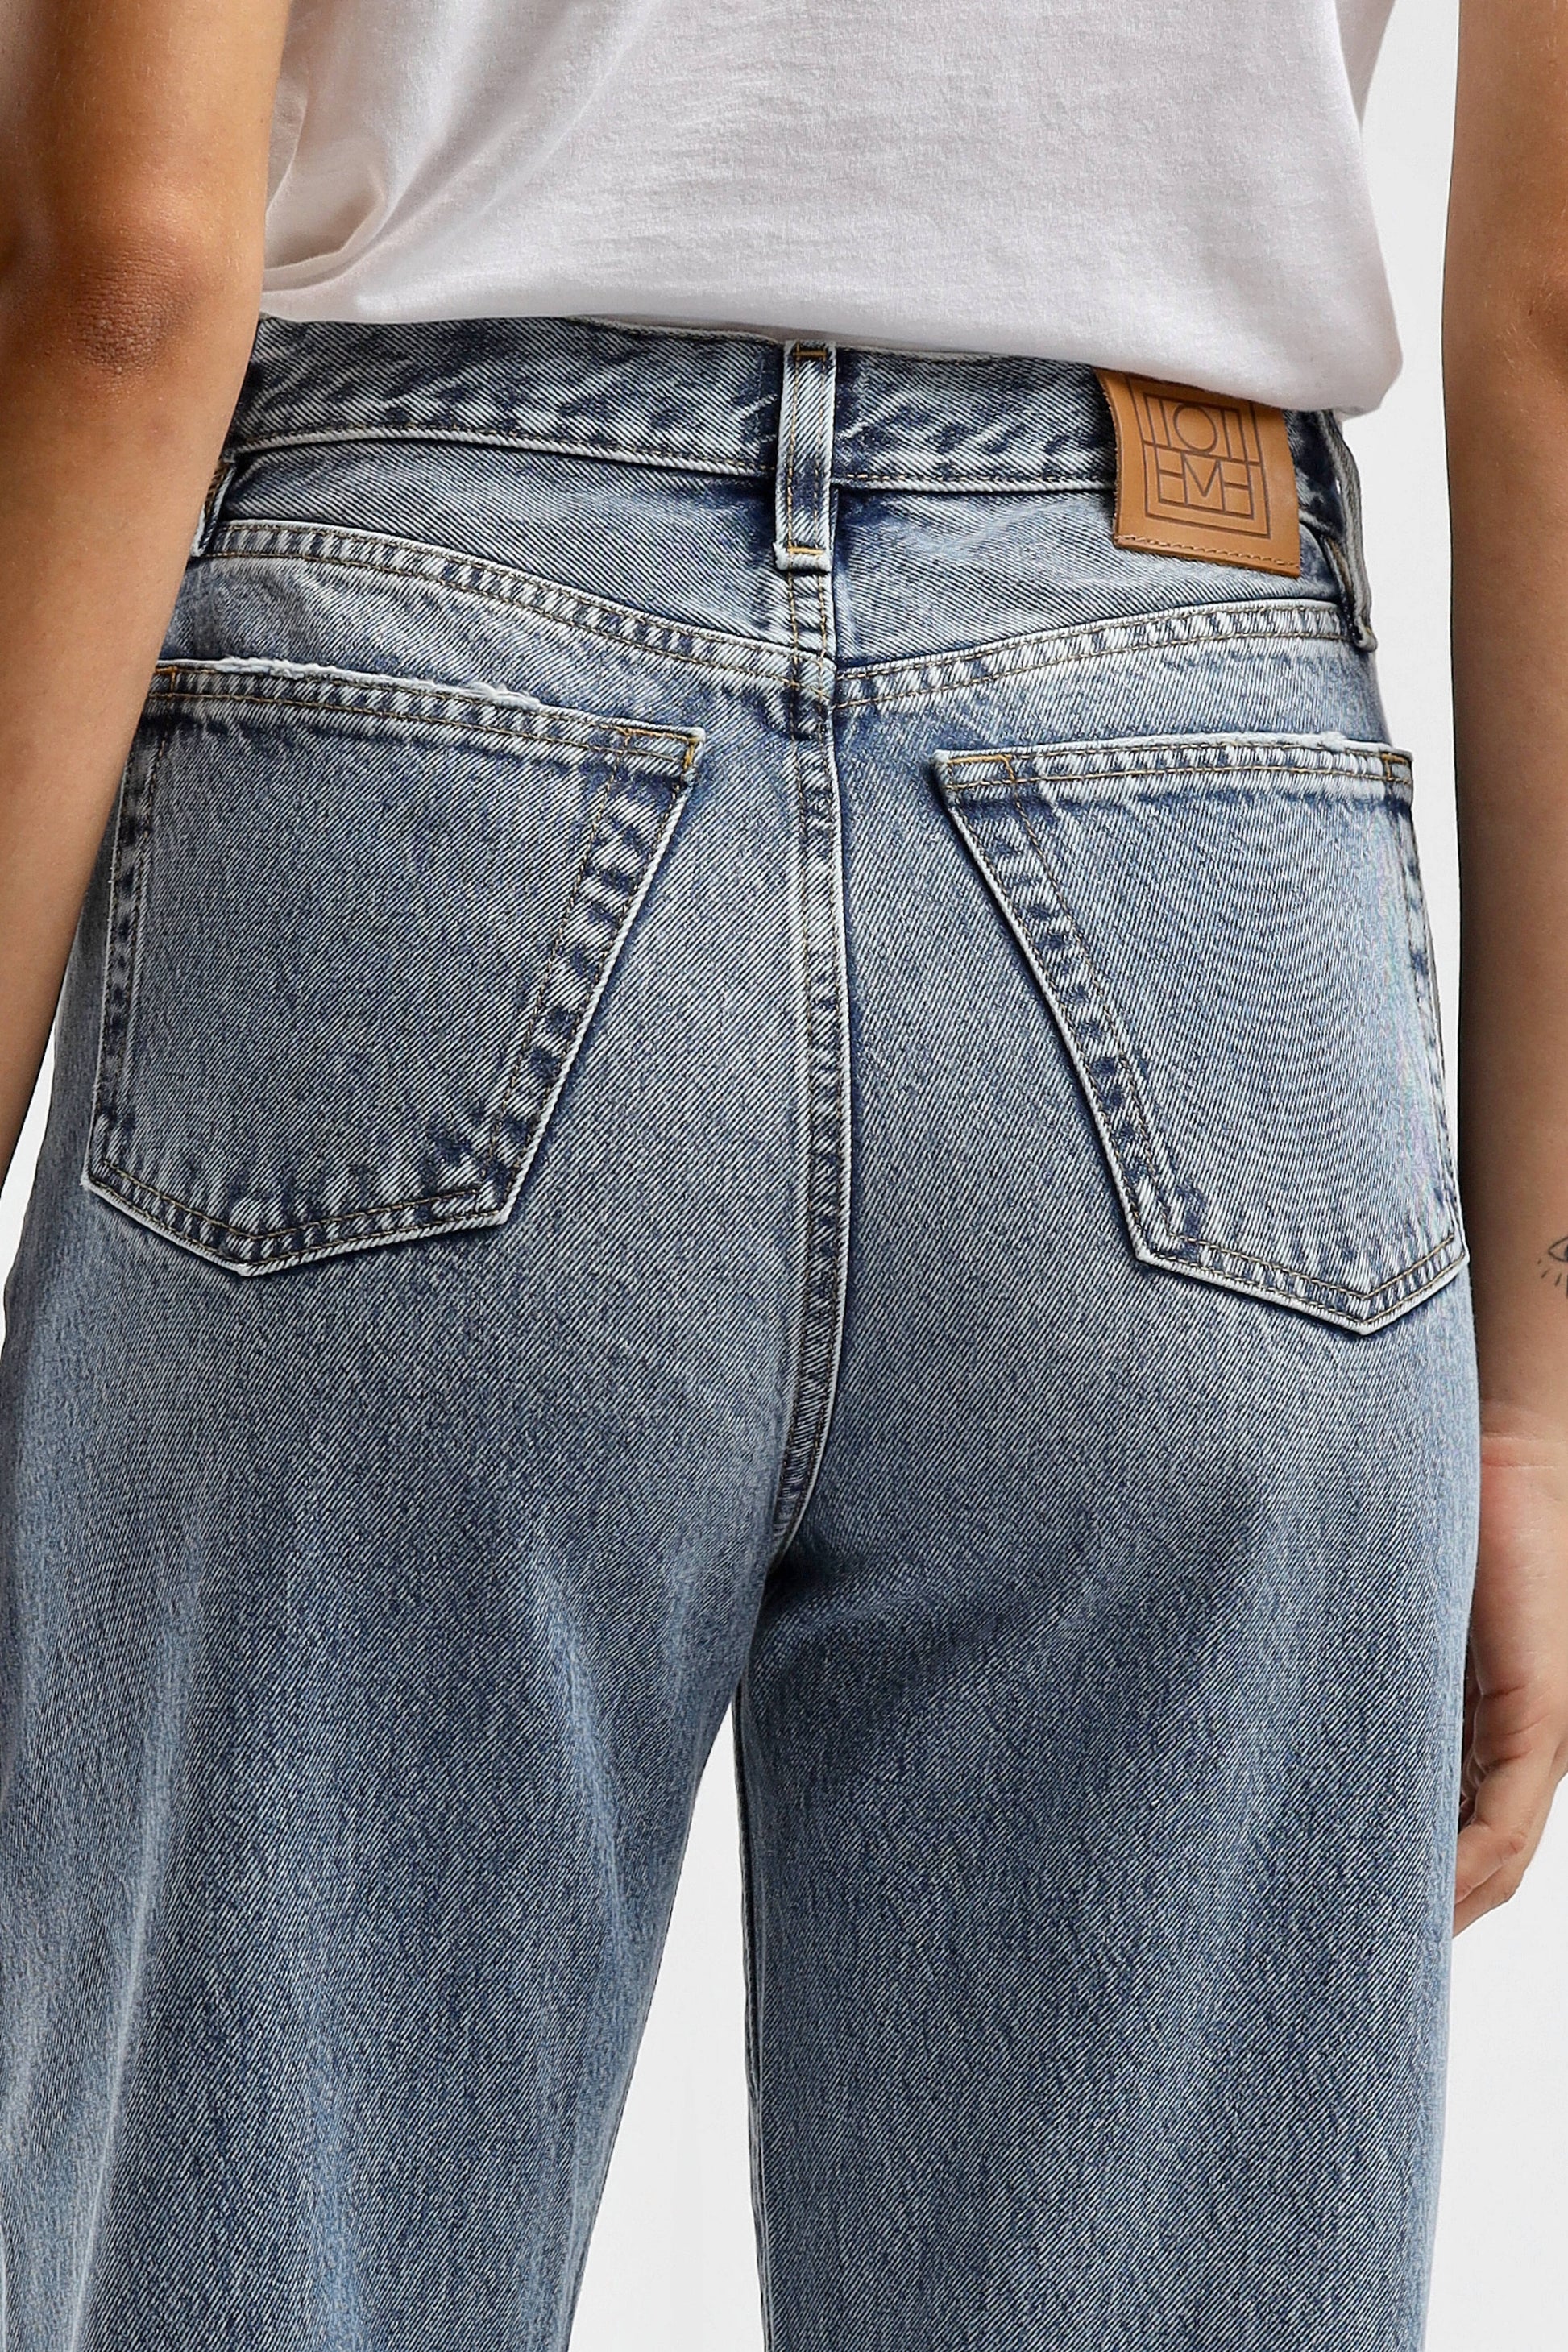 Jeans Twisted Seam in Worn BlueToteme - Anita Hass